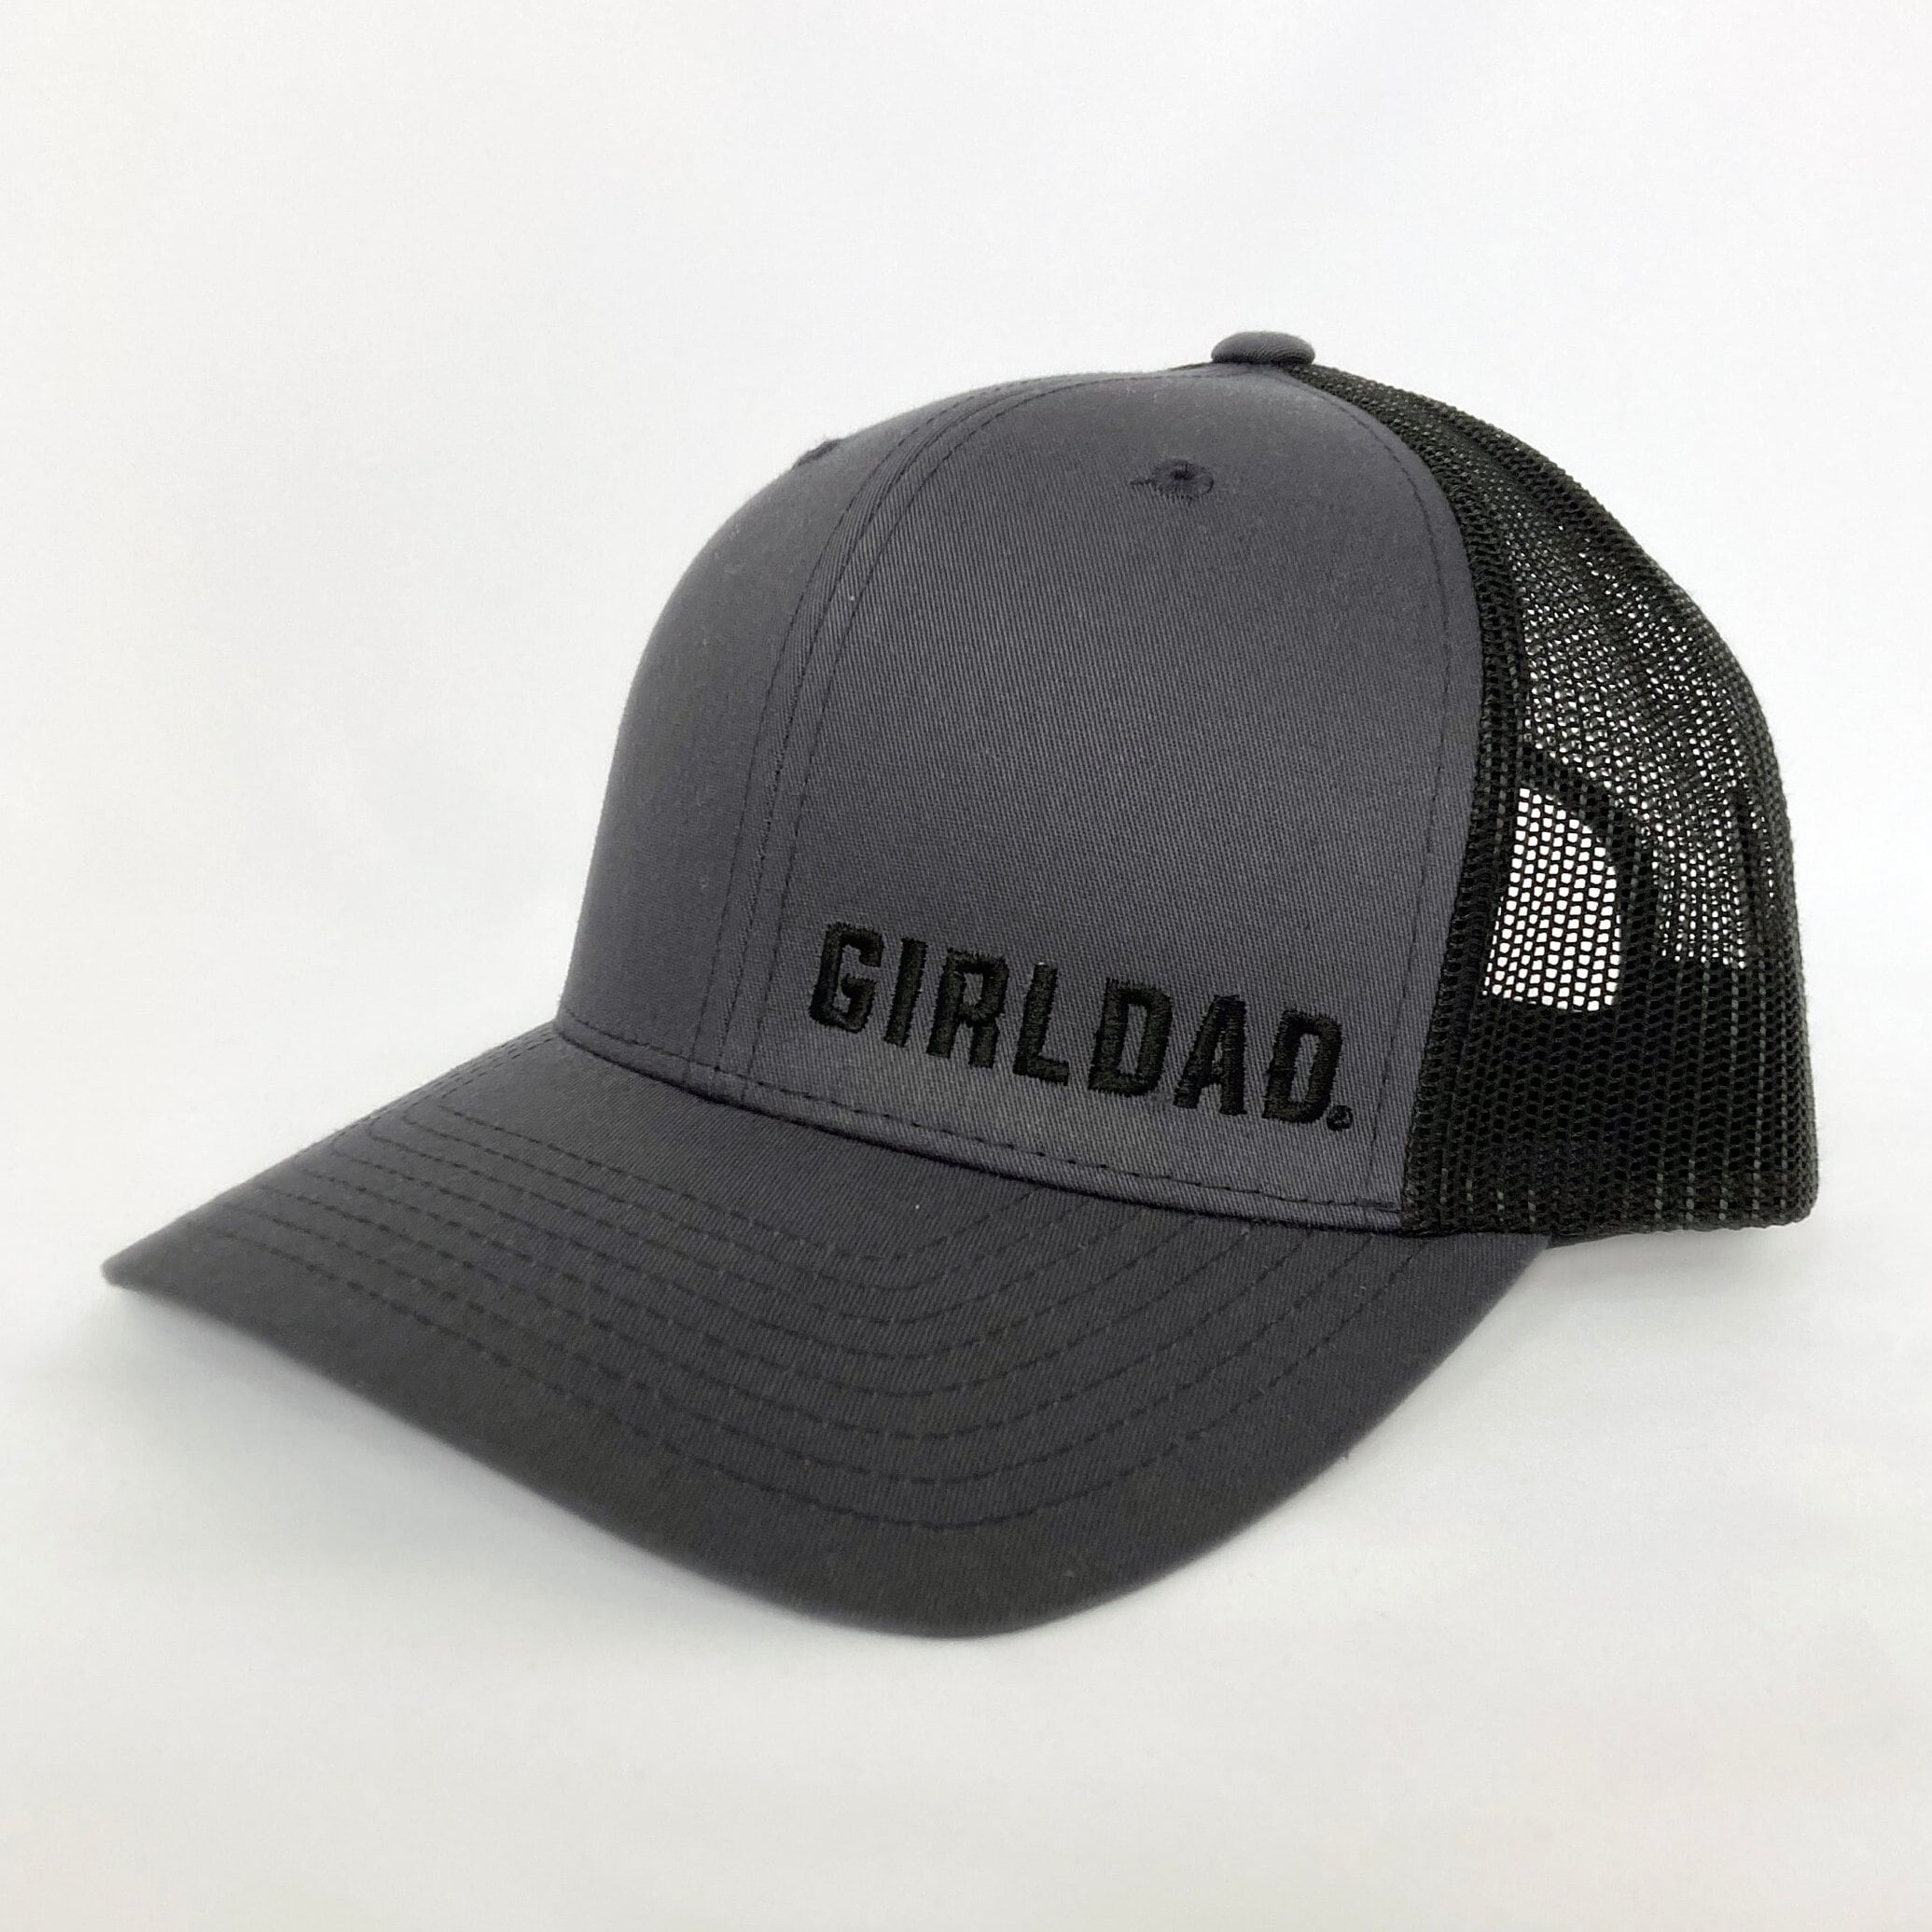 Girldad® Embroidered Trucker Hat Charcoal Black with Black Offset logo